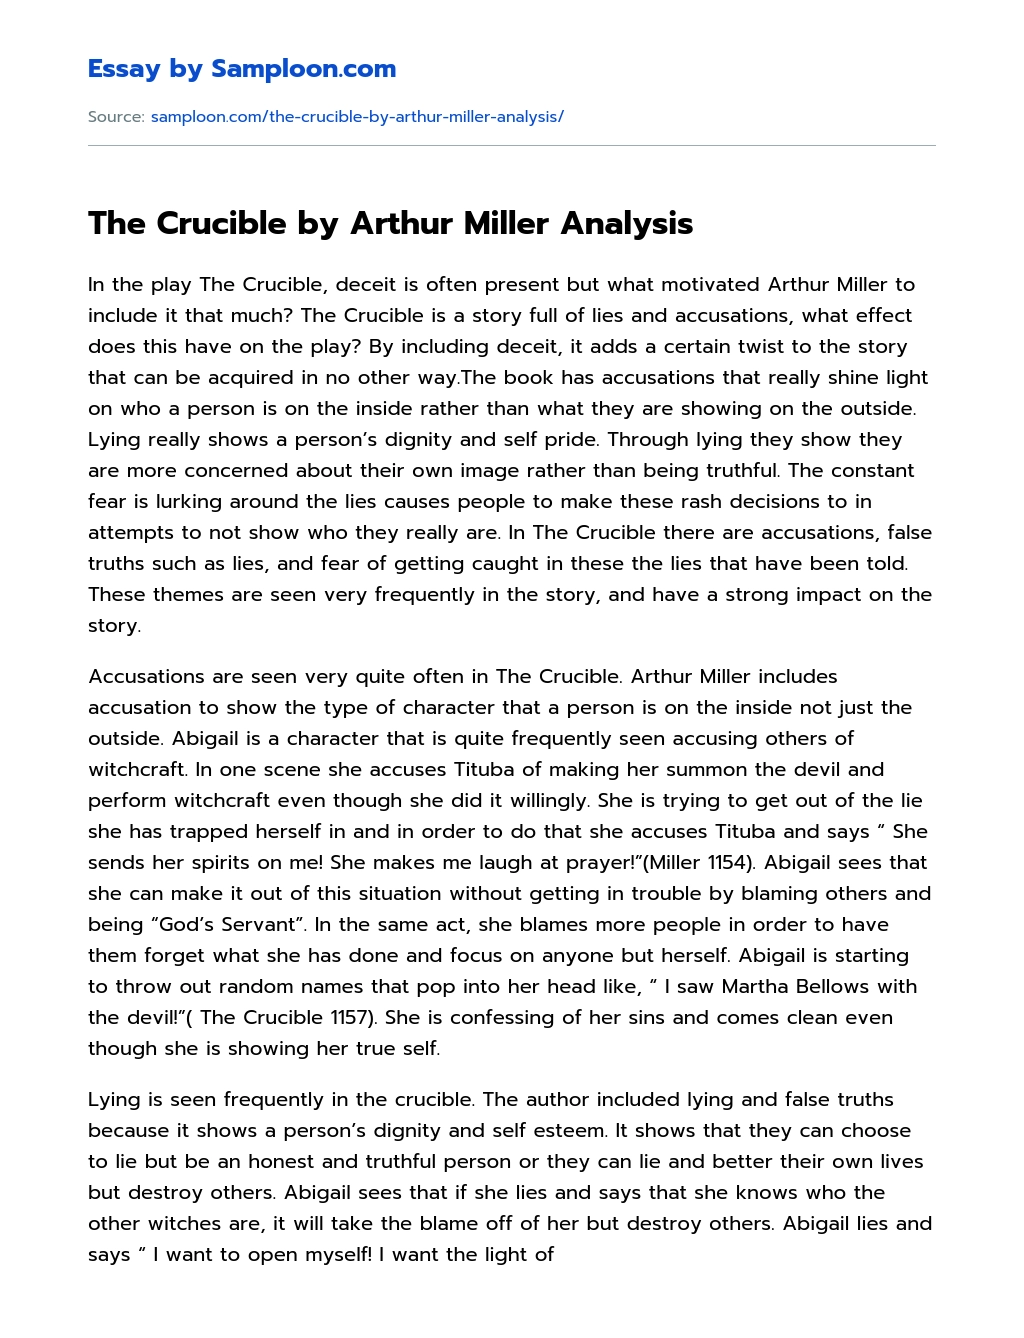 The Crucible by Arthur Miller Analysis essay